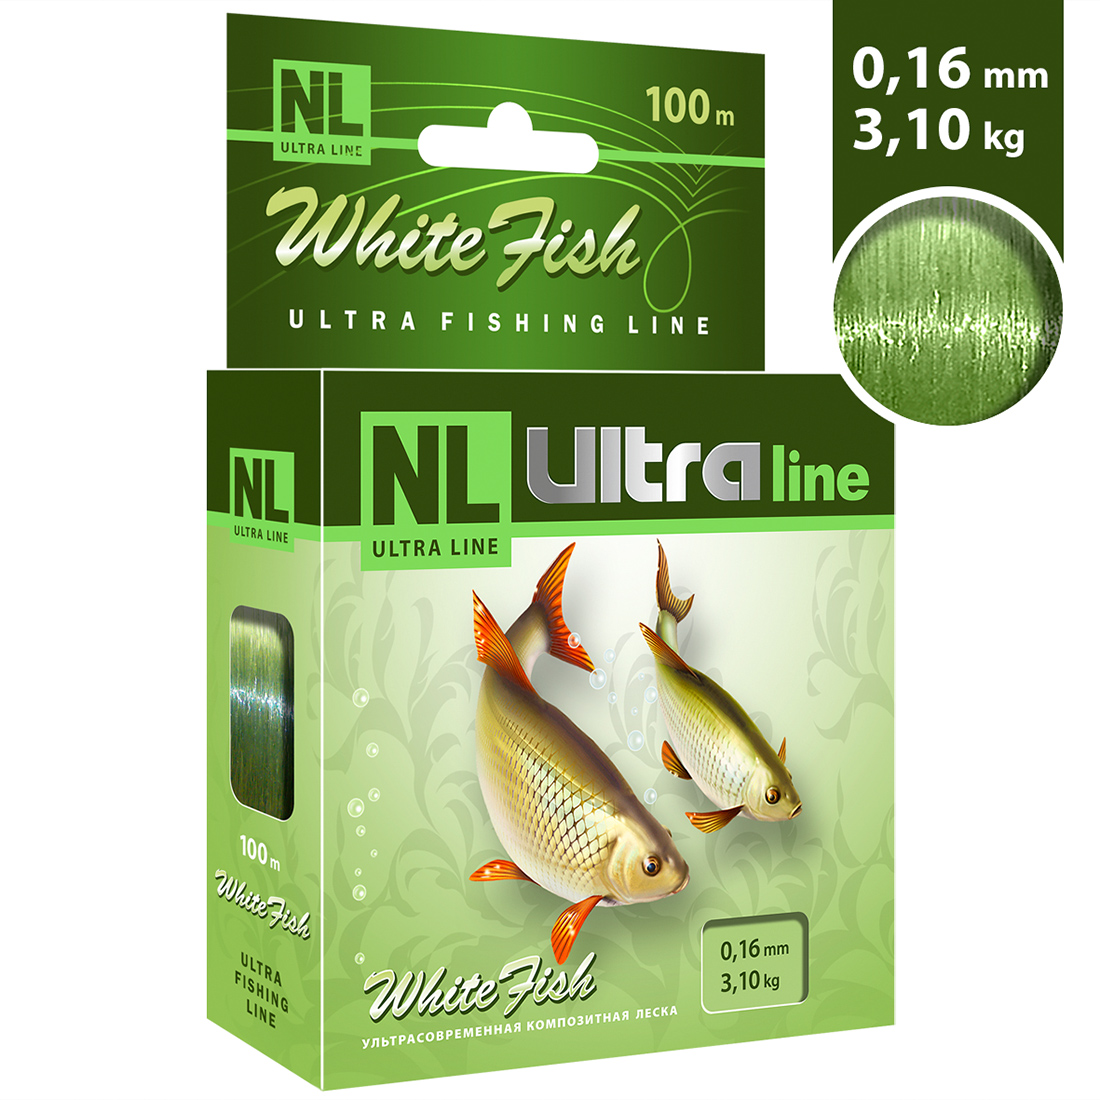 Леска AQUA NL ULTRA WHITE FISH (Белая рыба) 100m 0,16mm, светло-зеленая, test - 3,10kg